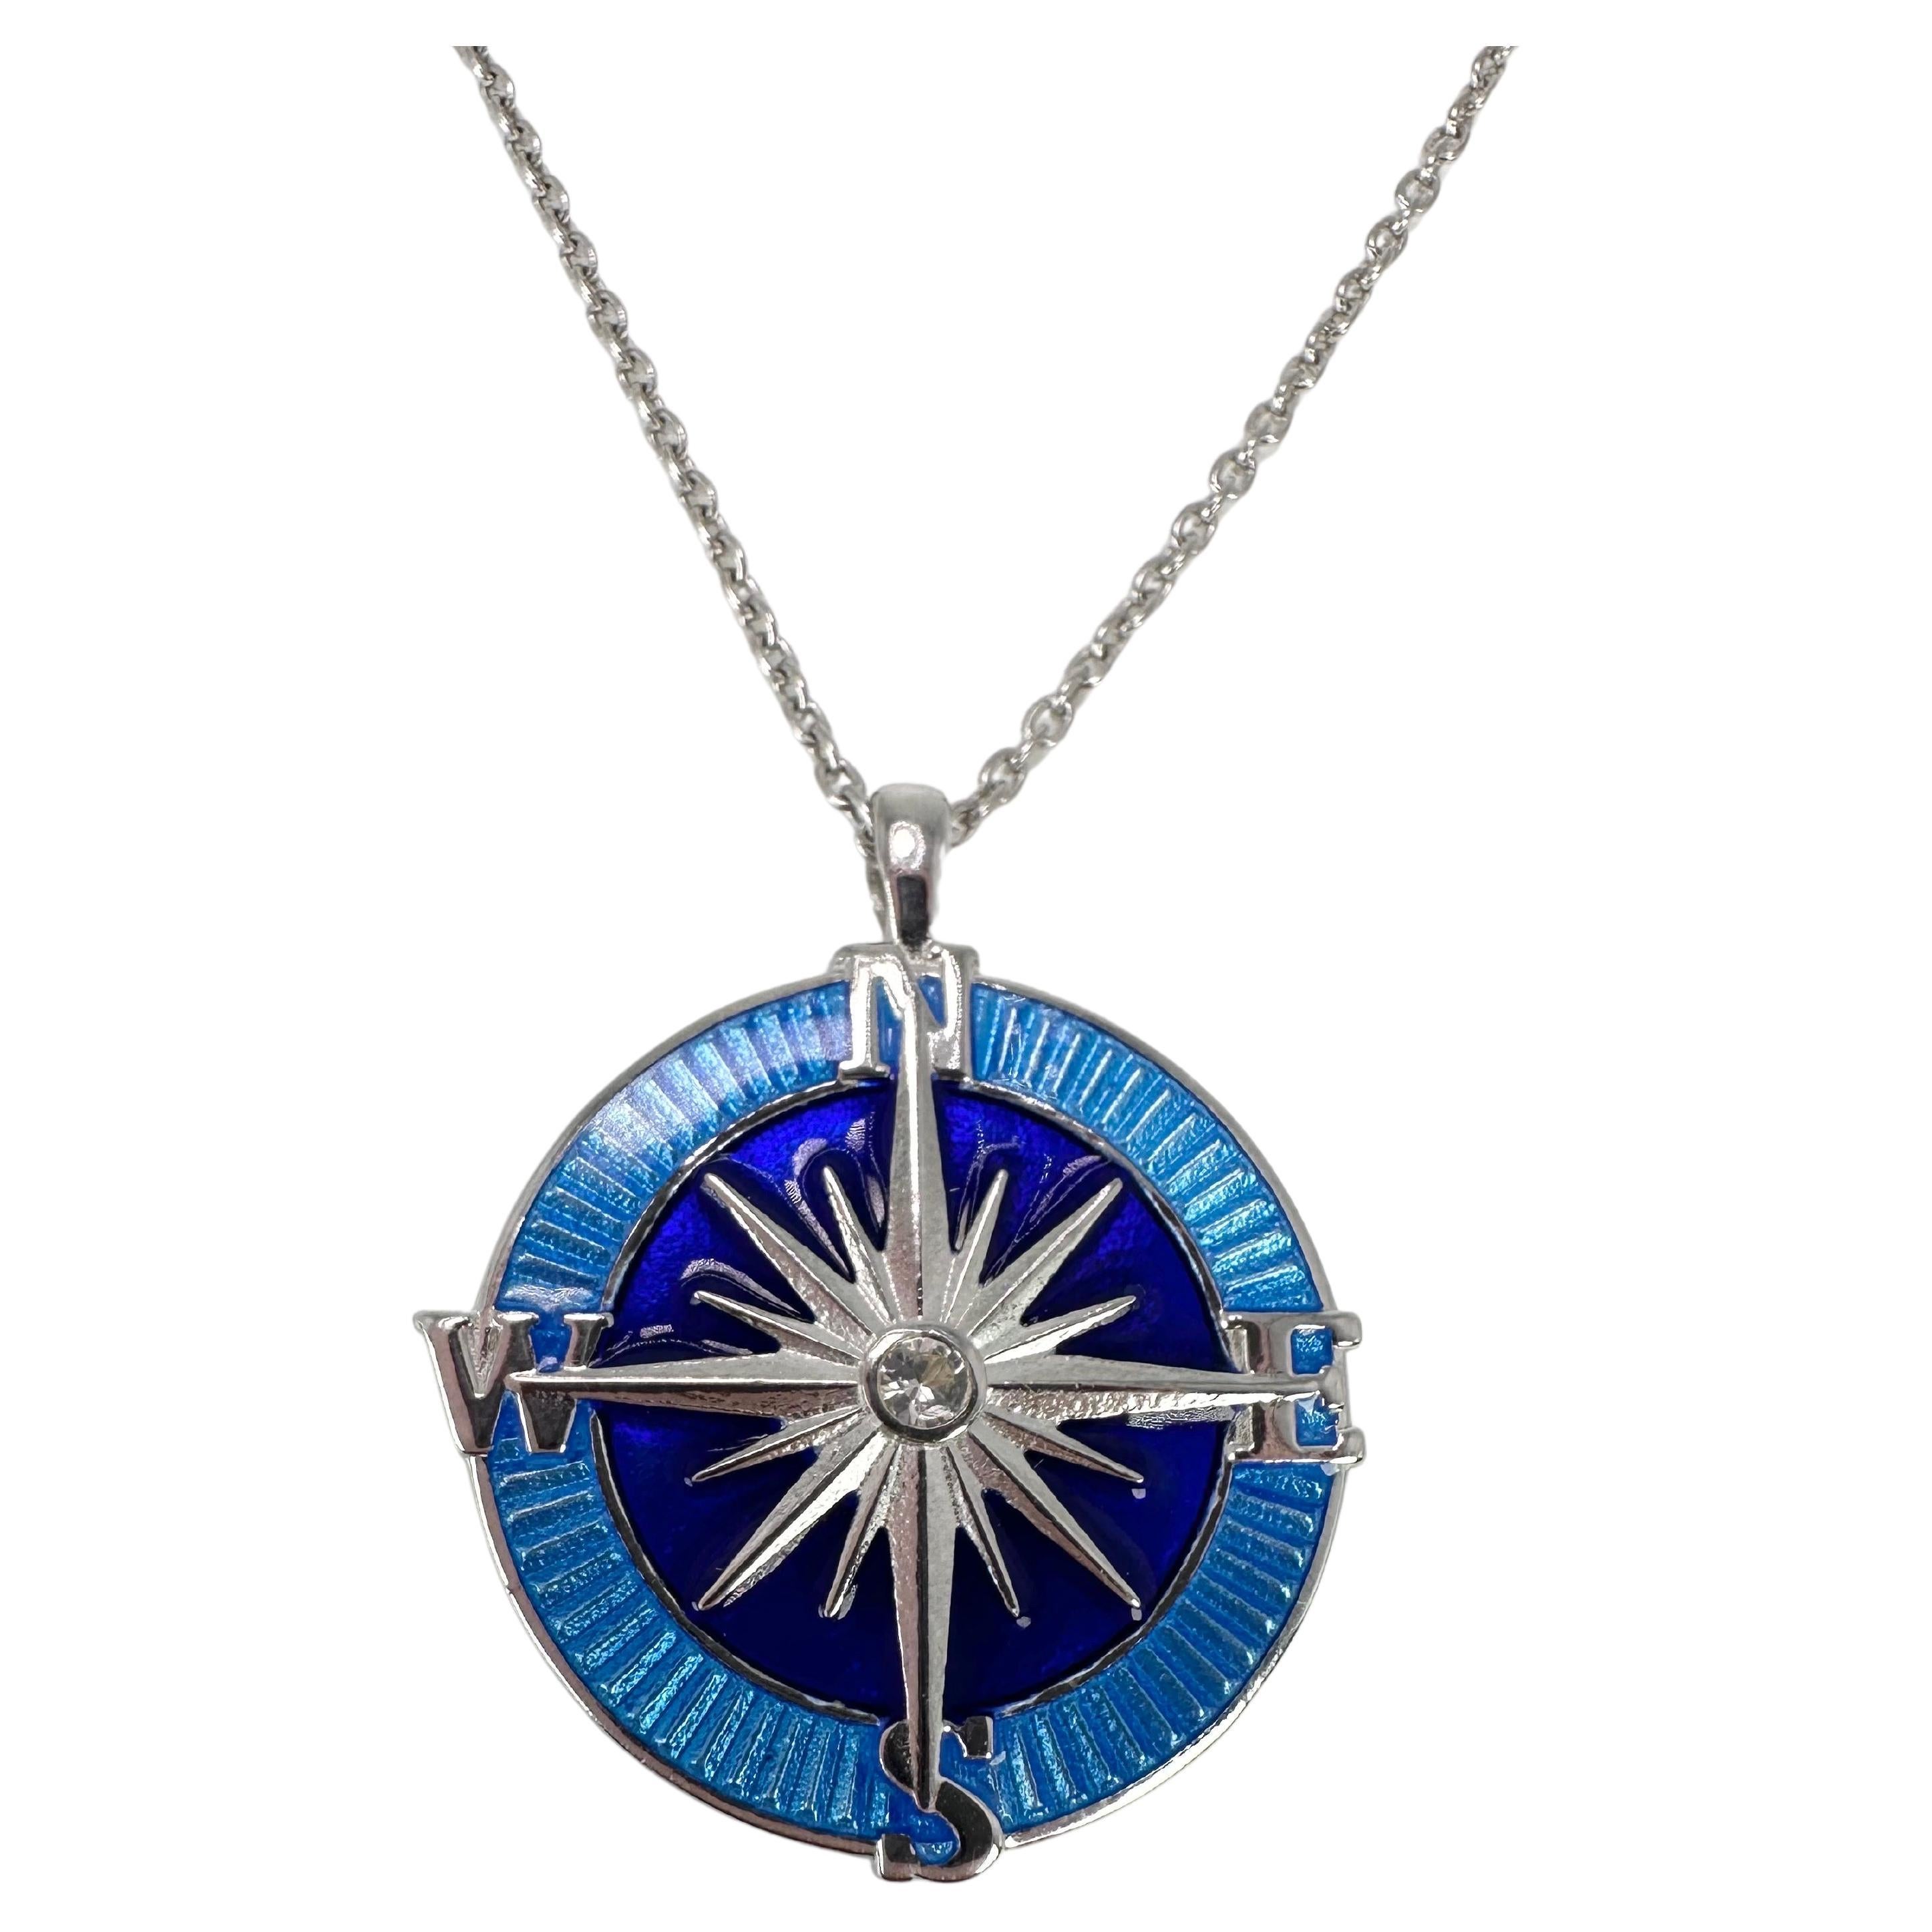 Compass diamond pendant necklace in silver with unique liquid glass enamel